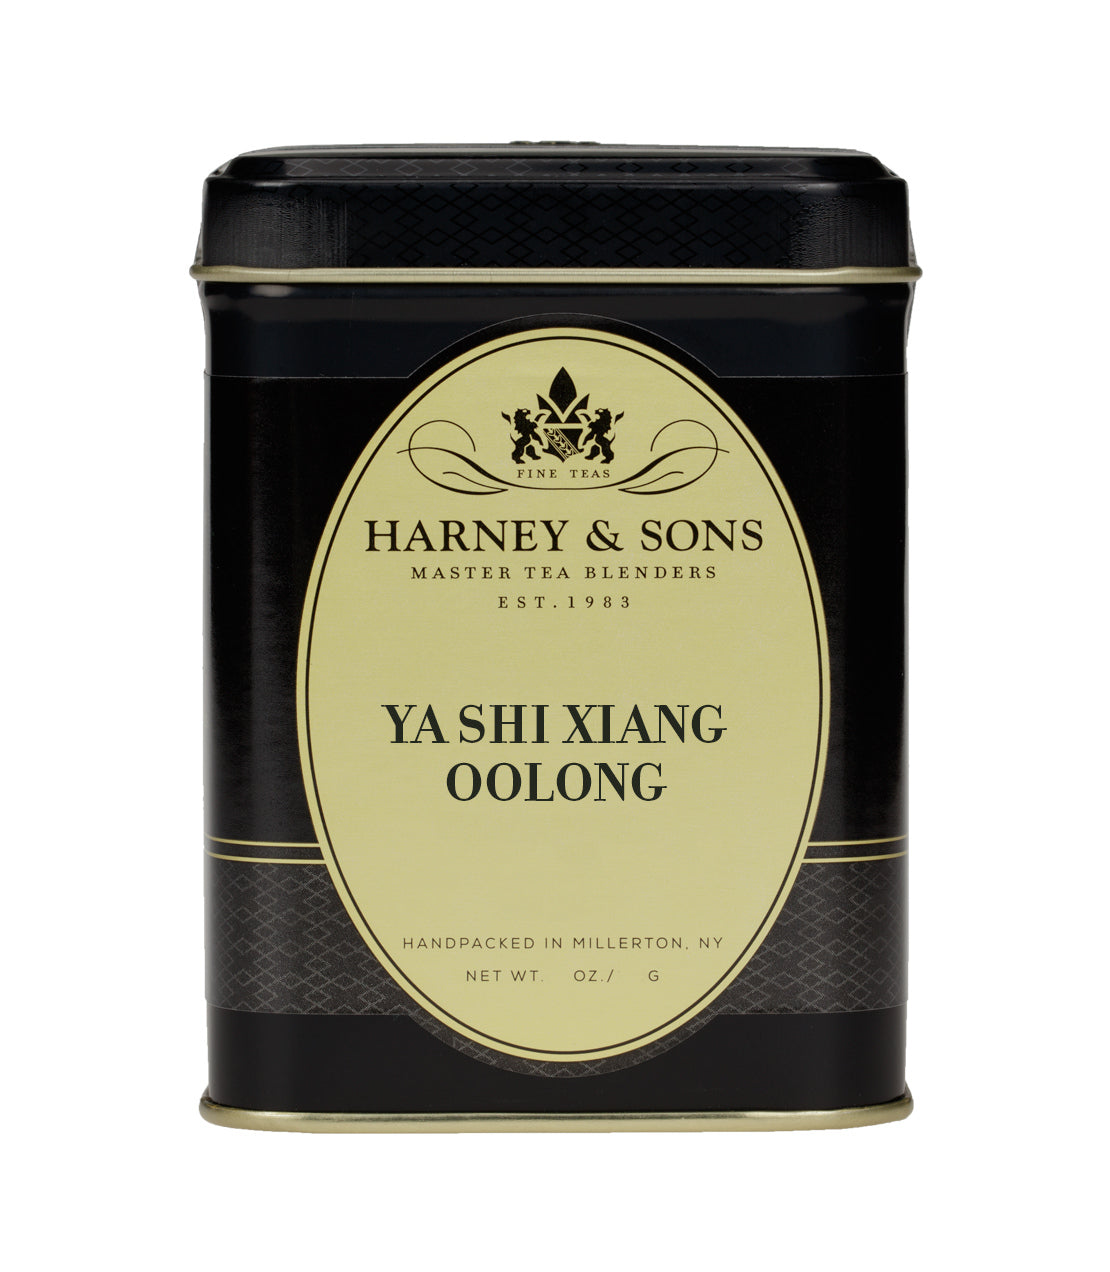 Ya Shi Xiang Oolong - Loose 2 oz. Tin - Harney & Sons Fine Teas